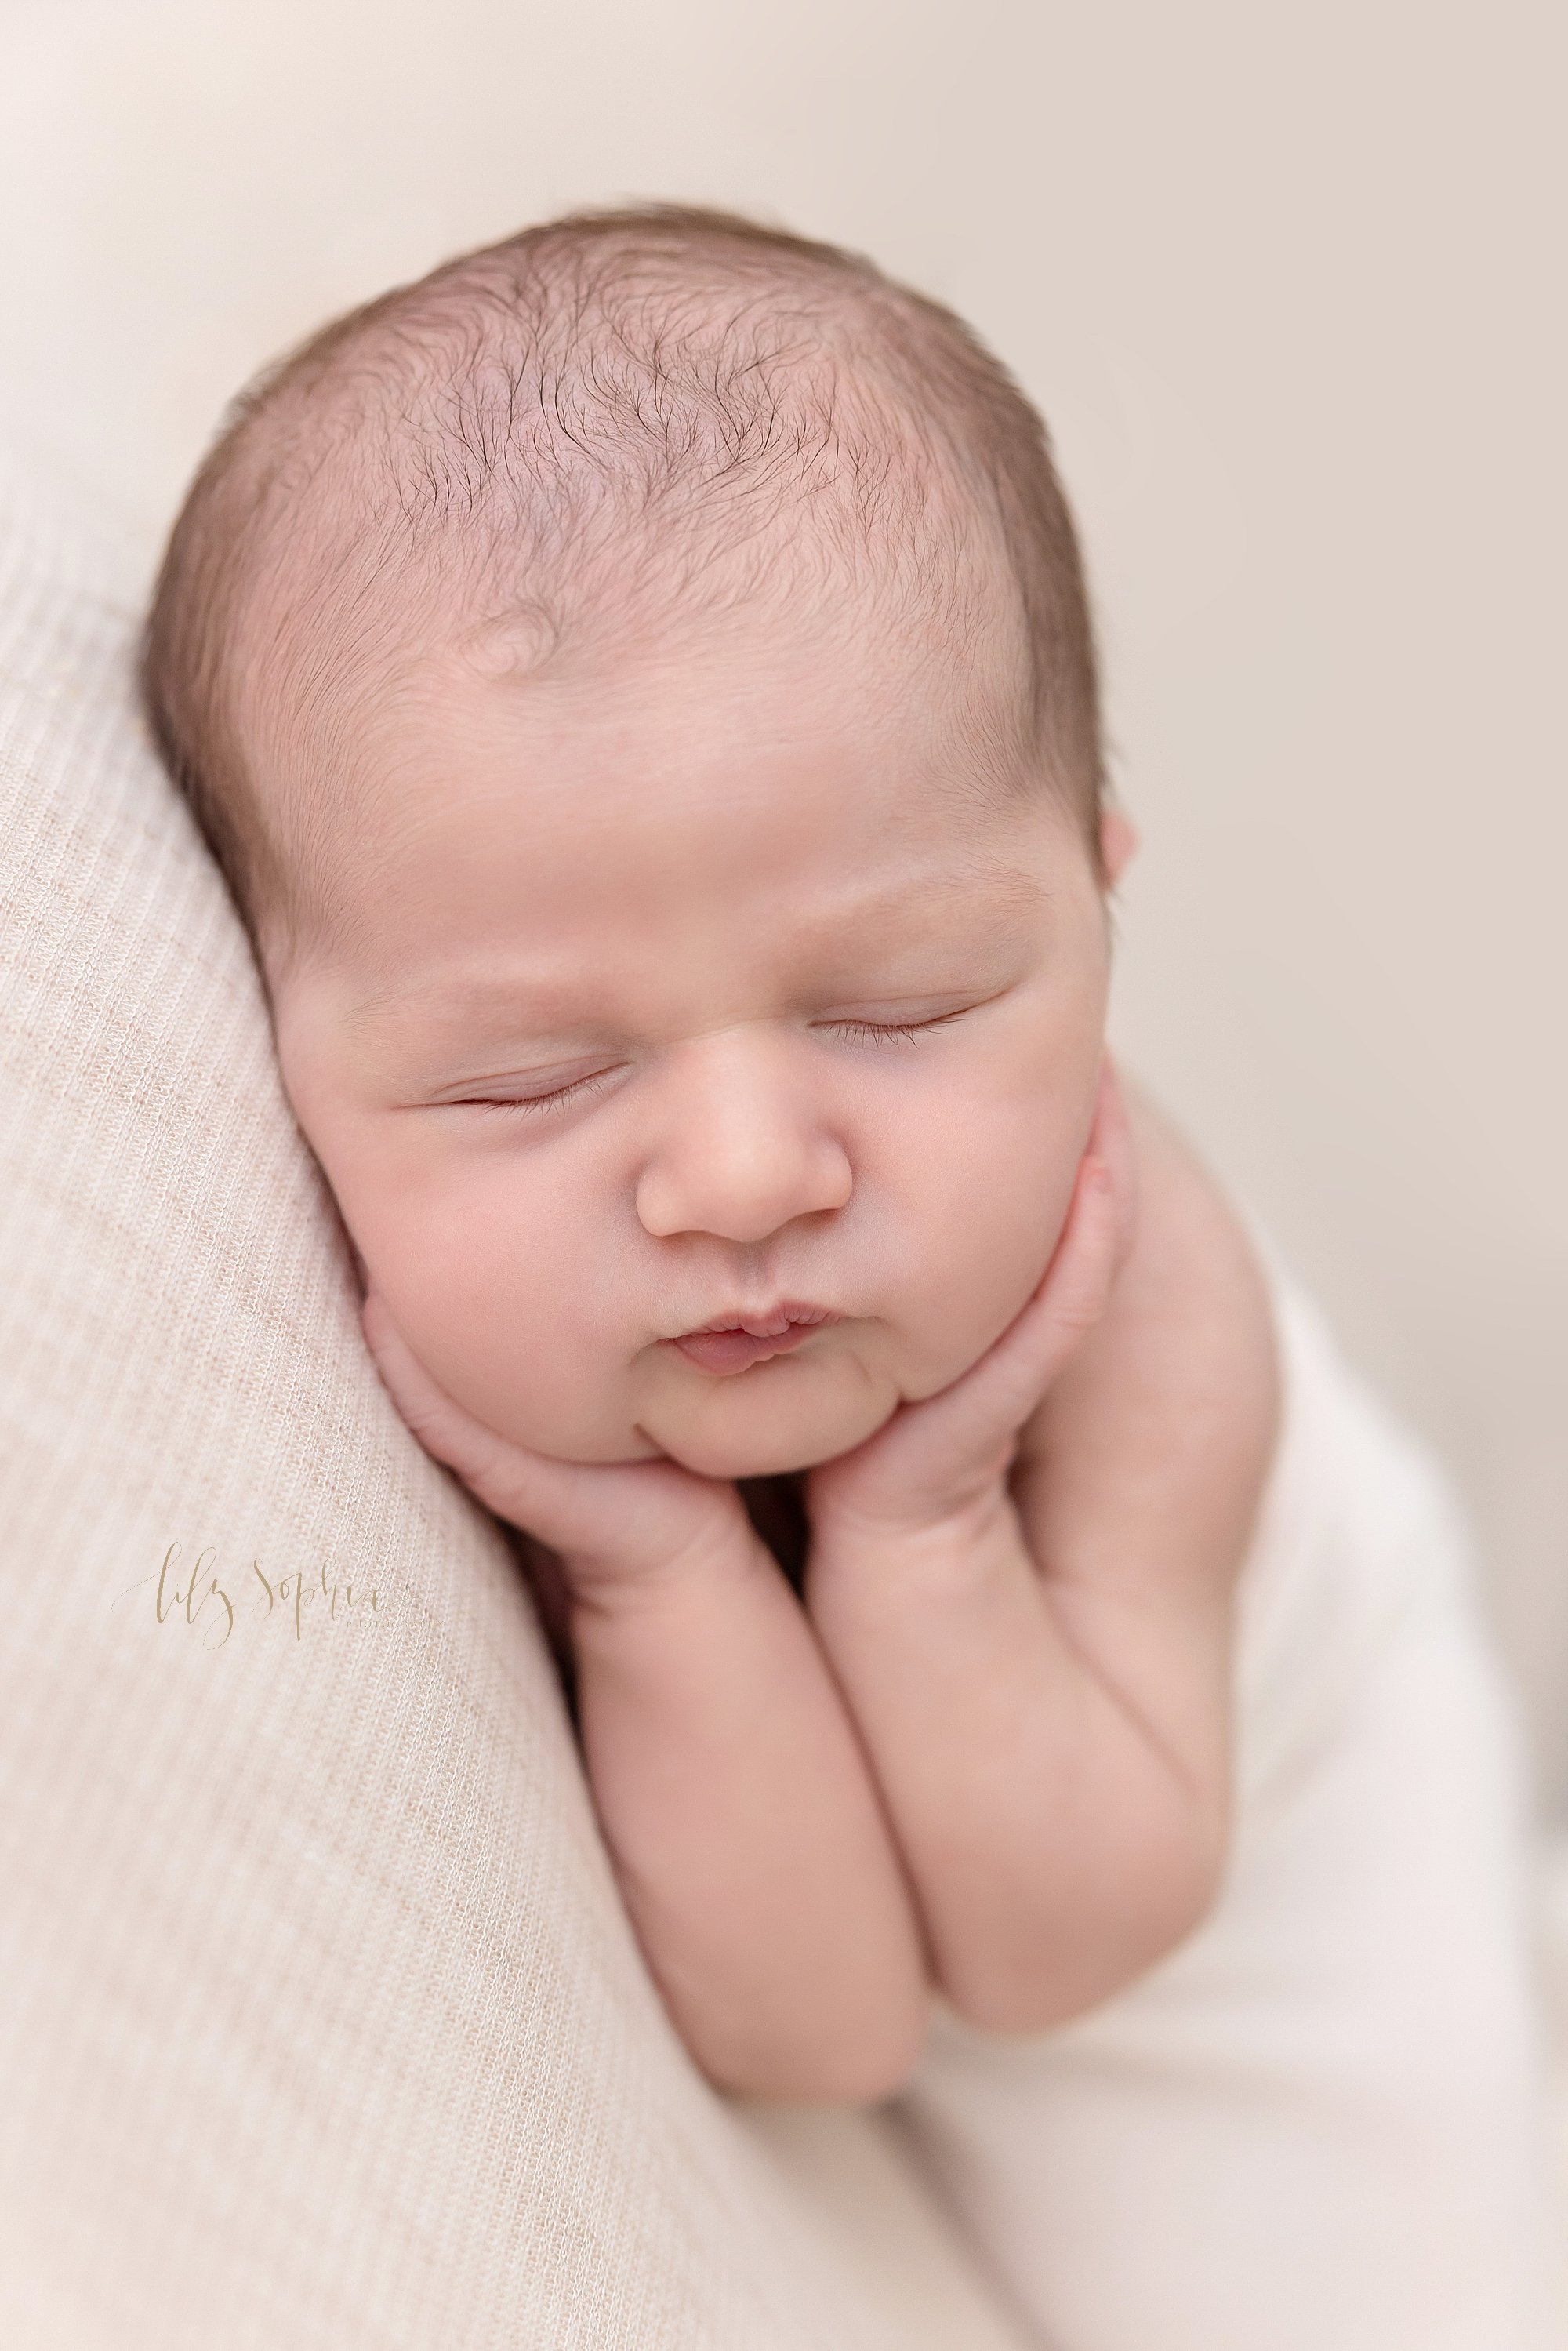 intown-atlanta-decatur-buckhead-studio-newborn-baby-girl-pictures-family-photoshoot_3243.jpg